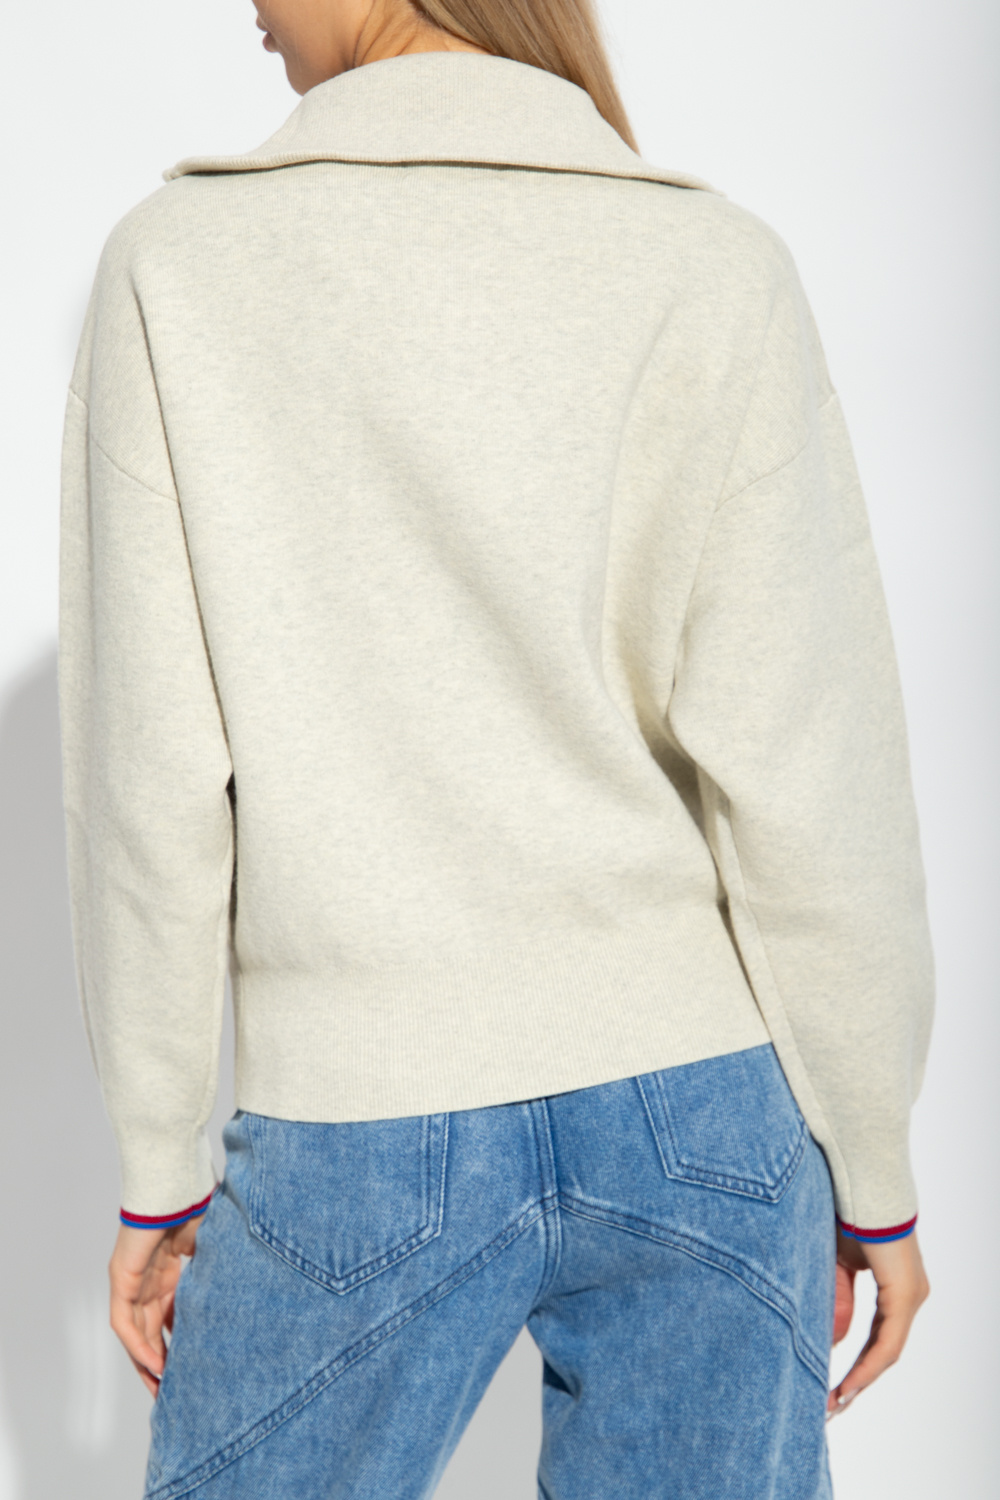 Marant Etoile ‘Louise’ sweater